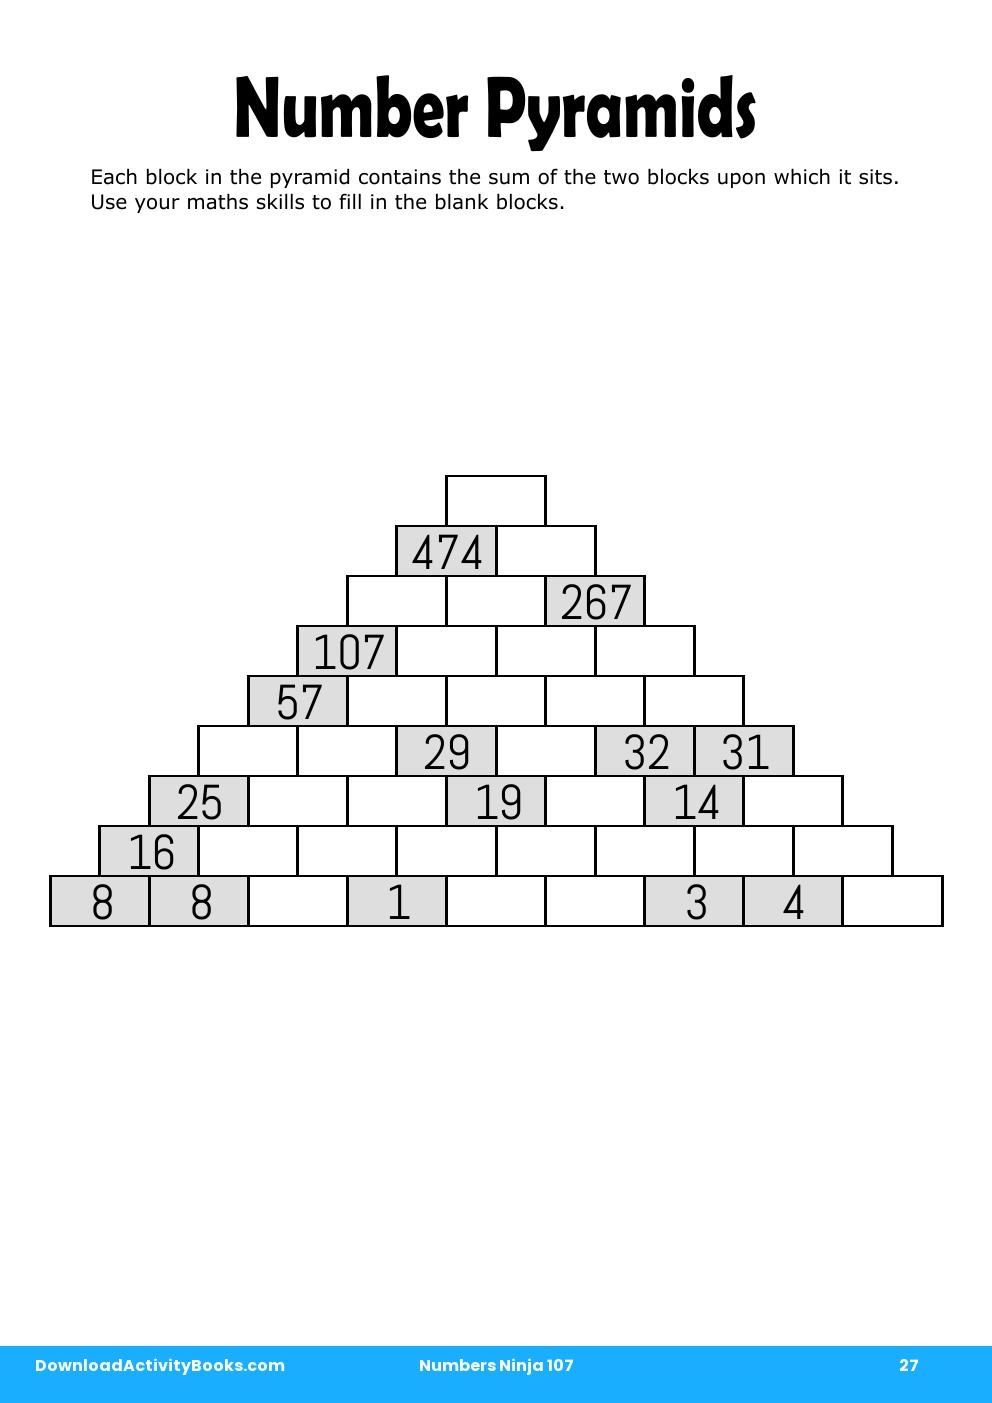 Number Pyramids in Numbers Ninja 107